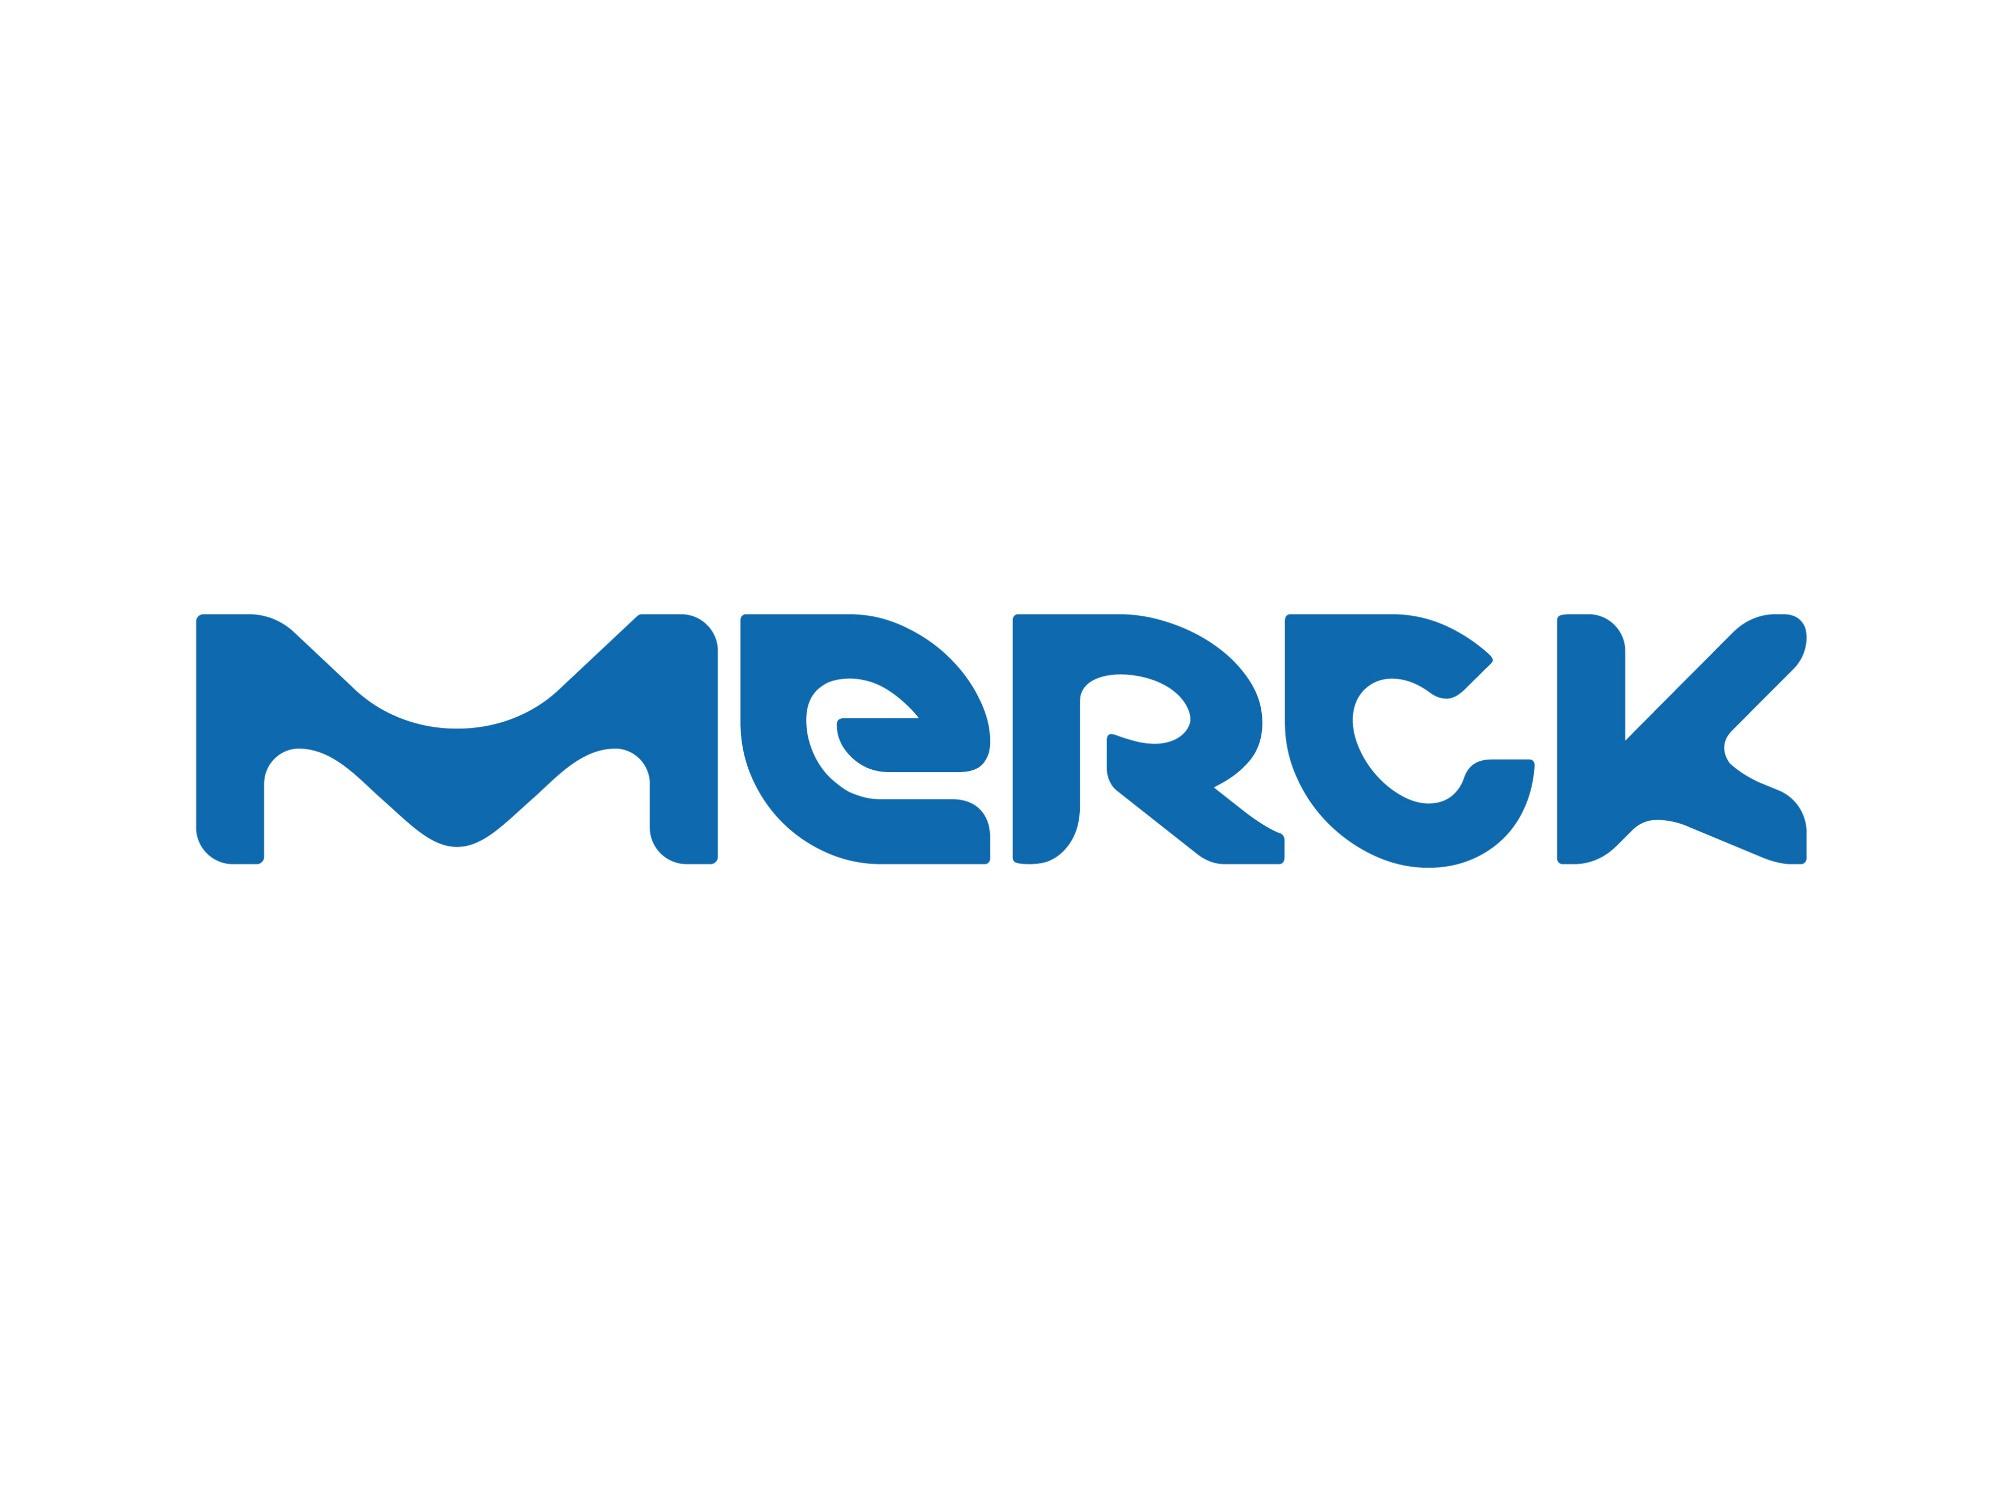 Merck Logo - The blue Merck logo